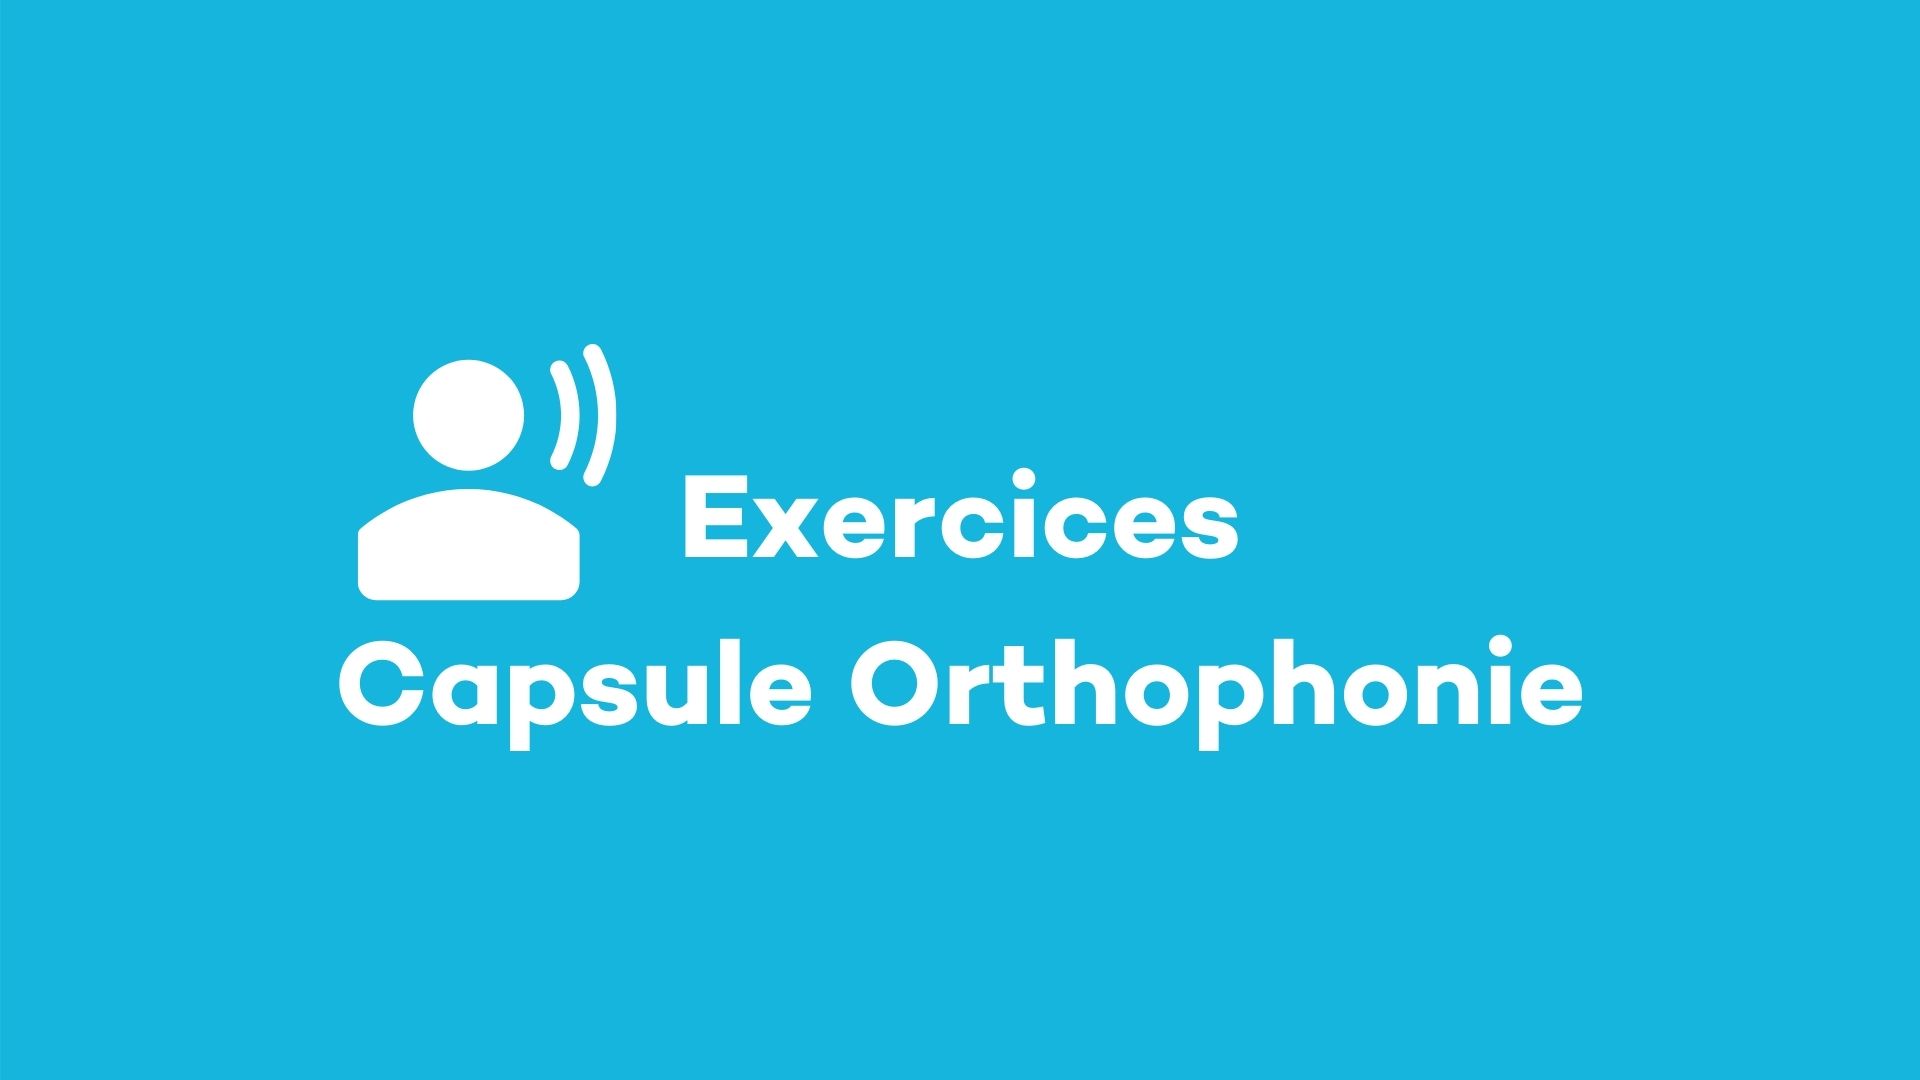 Exercices: capsule orthophonie